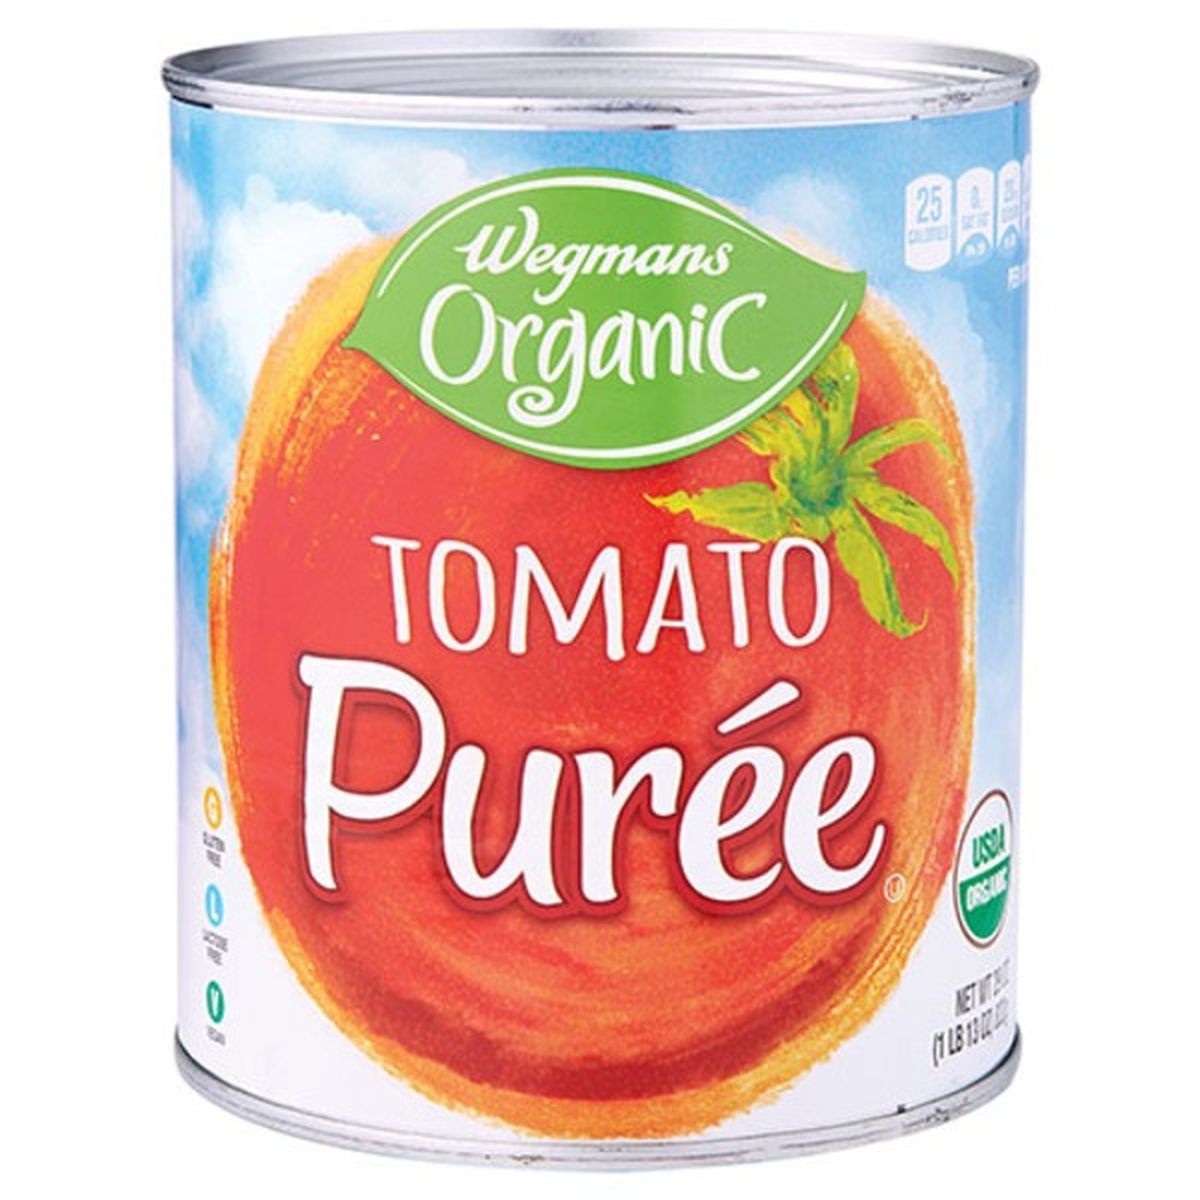 Calories in Wegmans Organic Tomato Puree